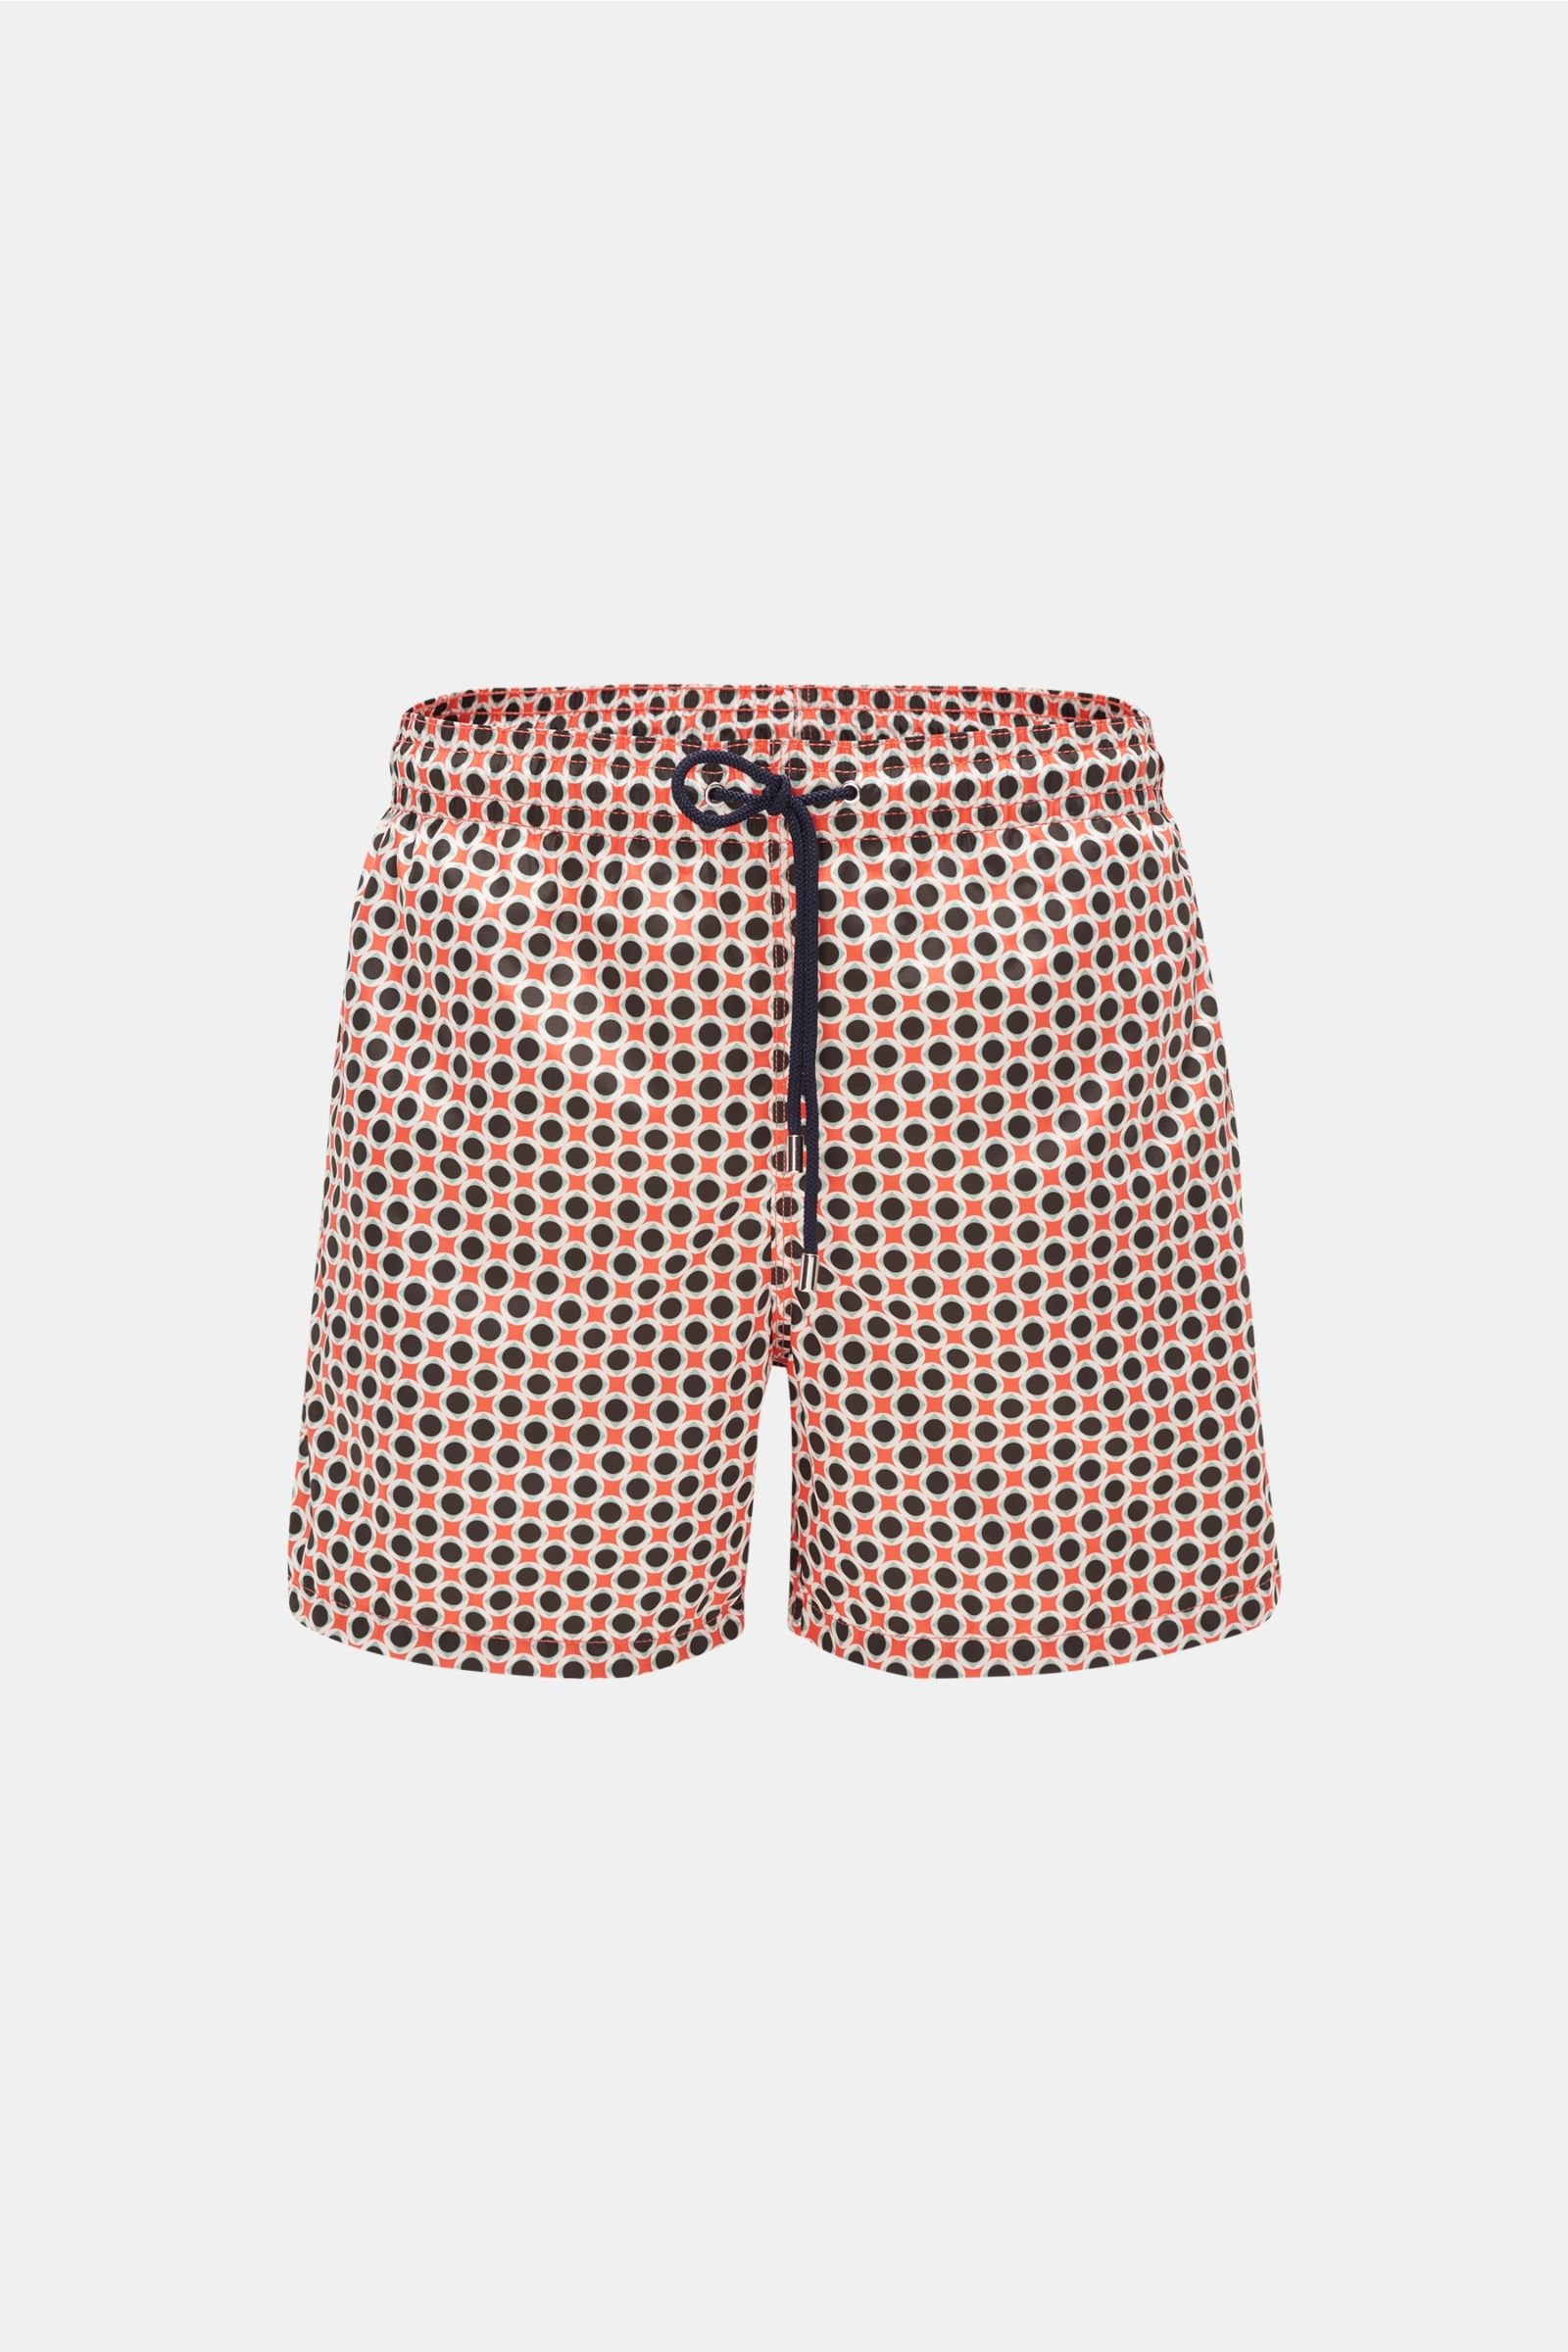 Swim shorts 'Stromboli' light red/black patterned